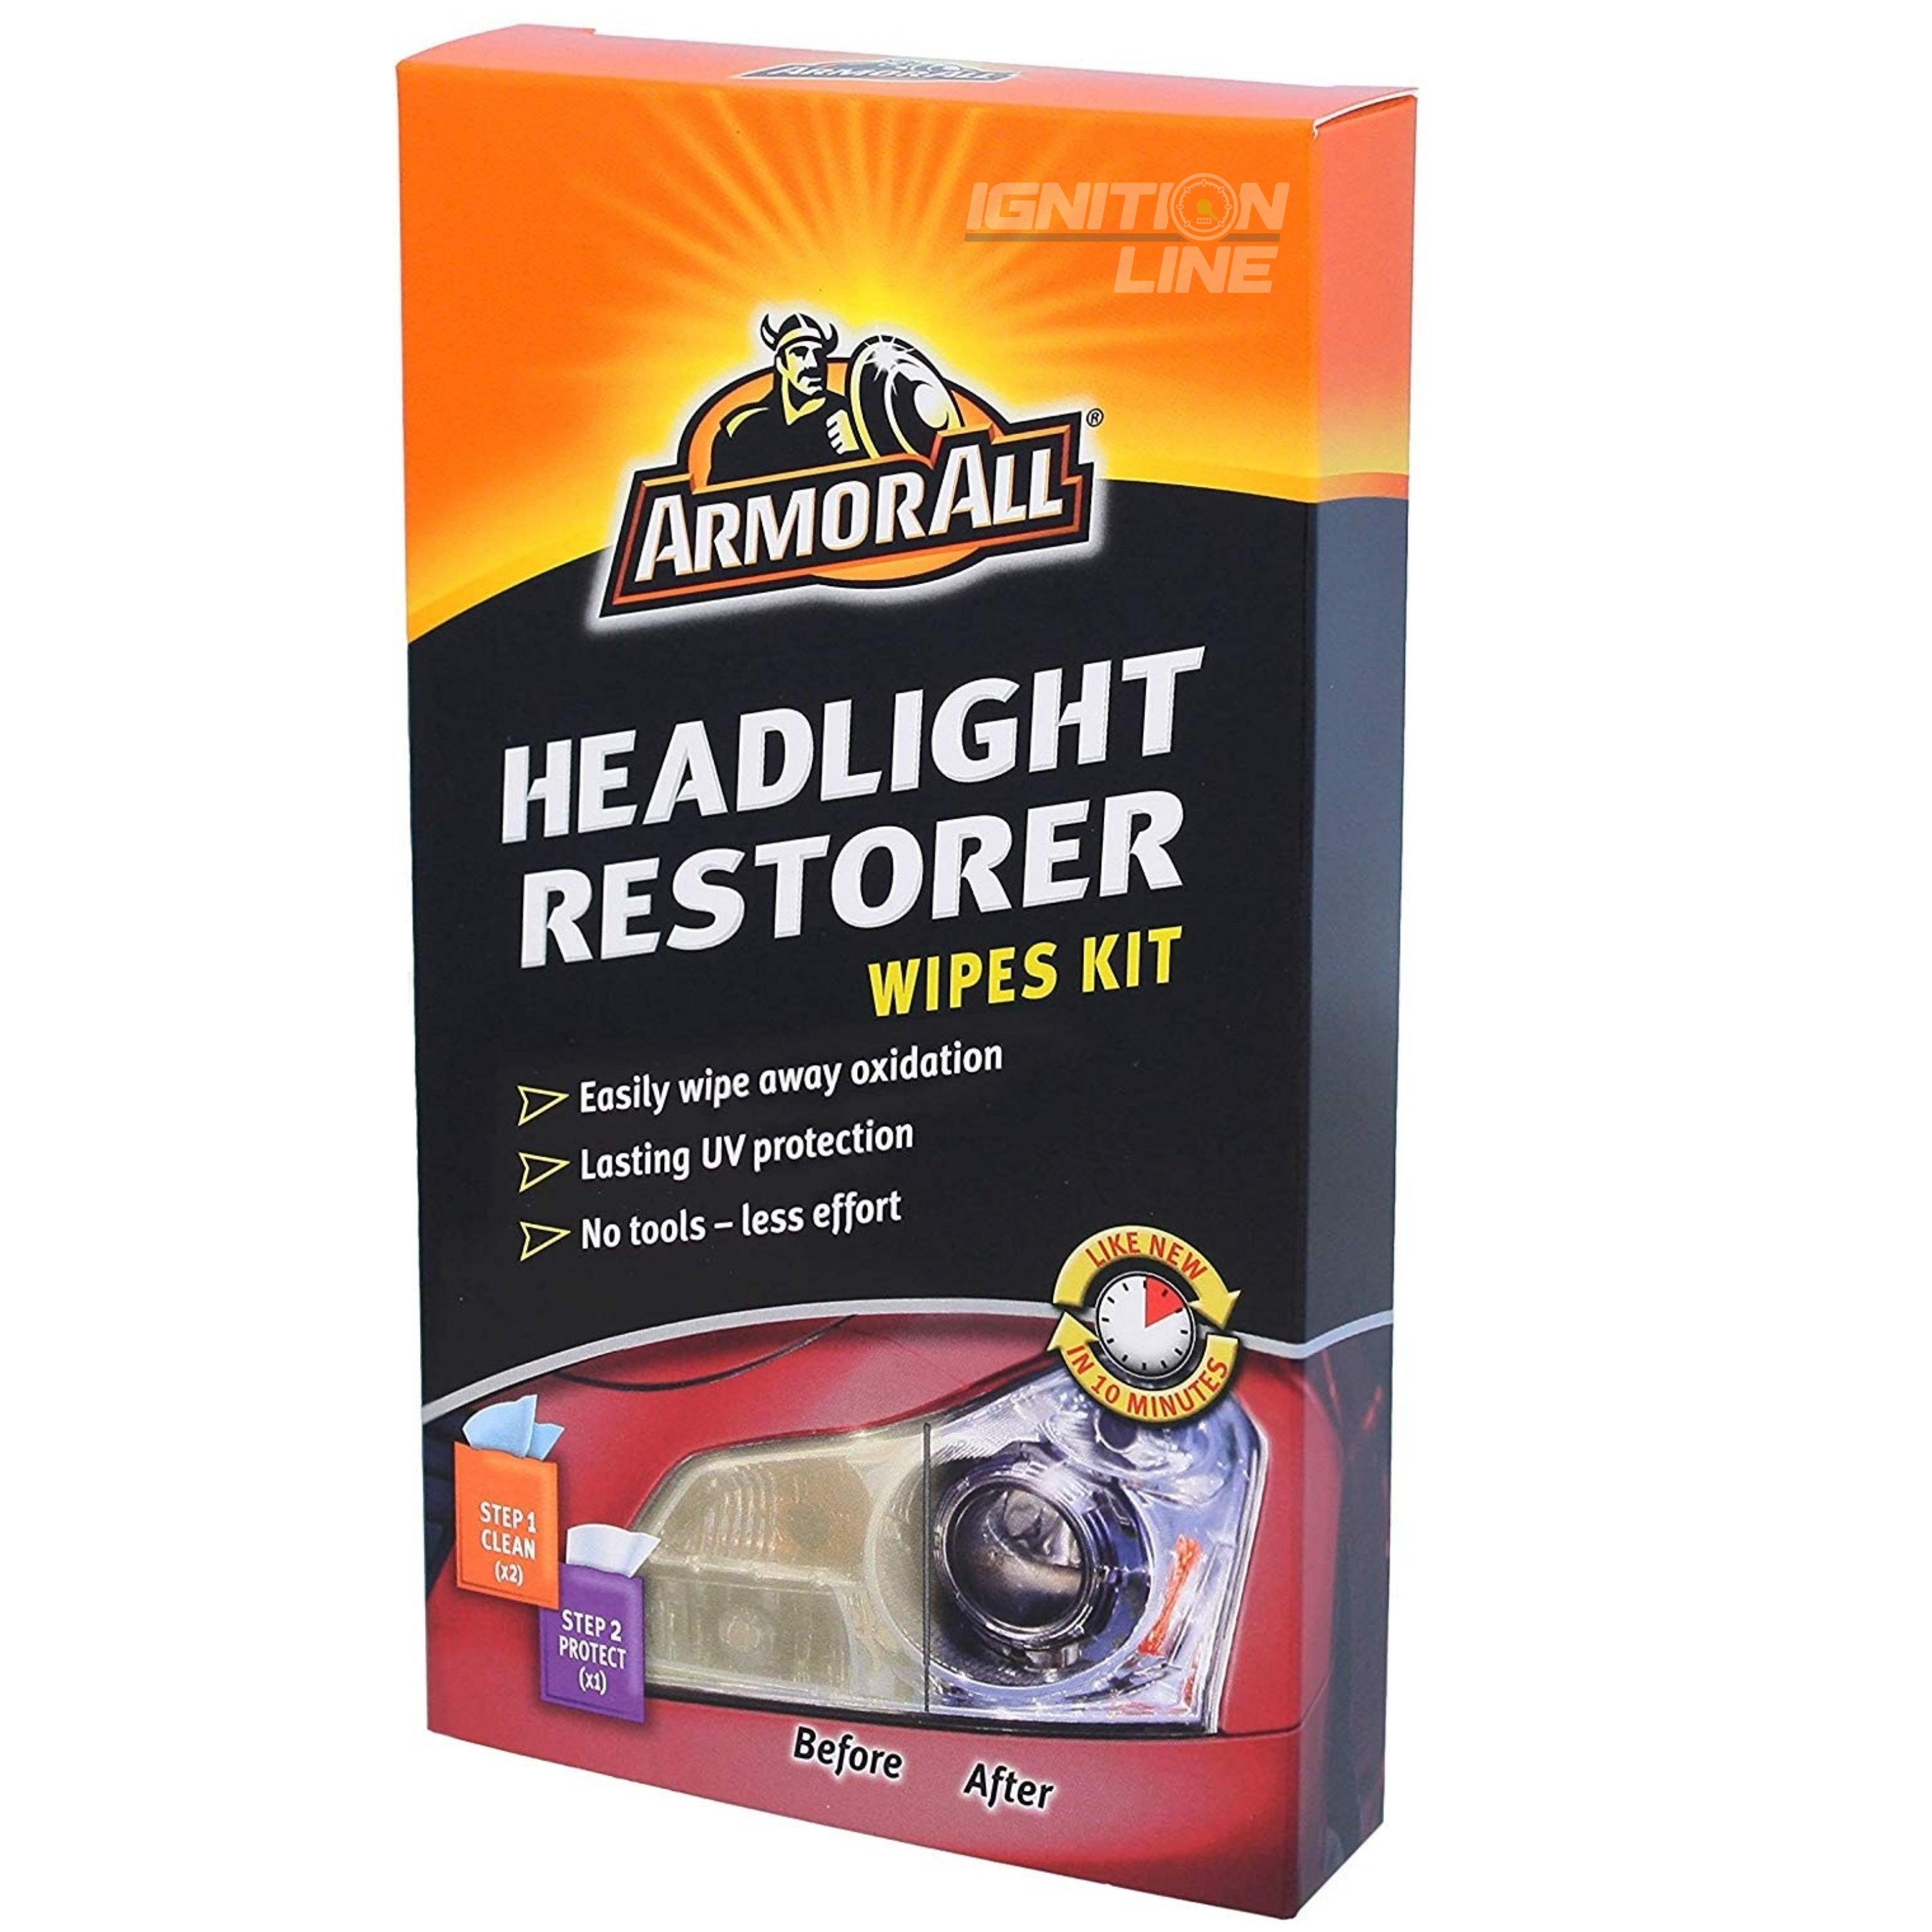 Armorall Headlight Restorer Kit